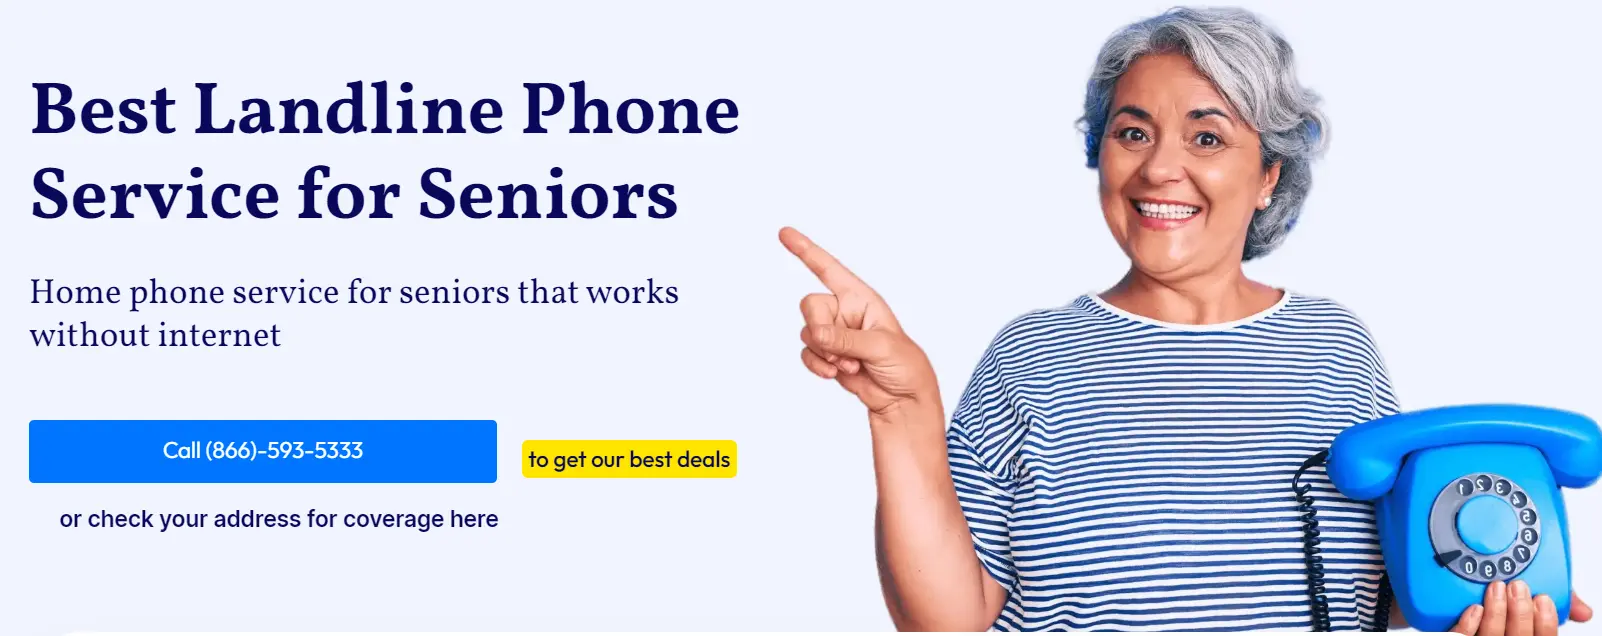 Image of Community Phone landline service for seniors